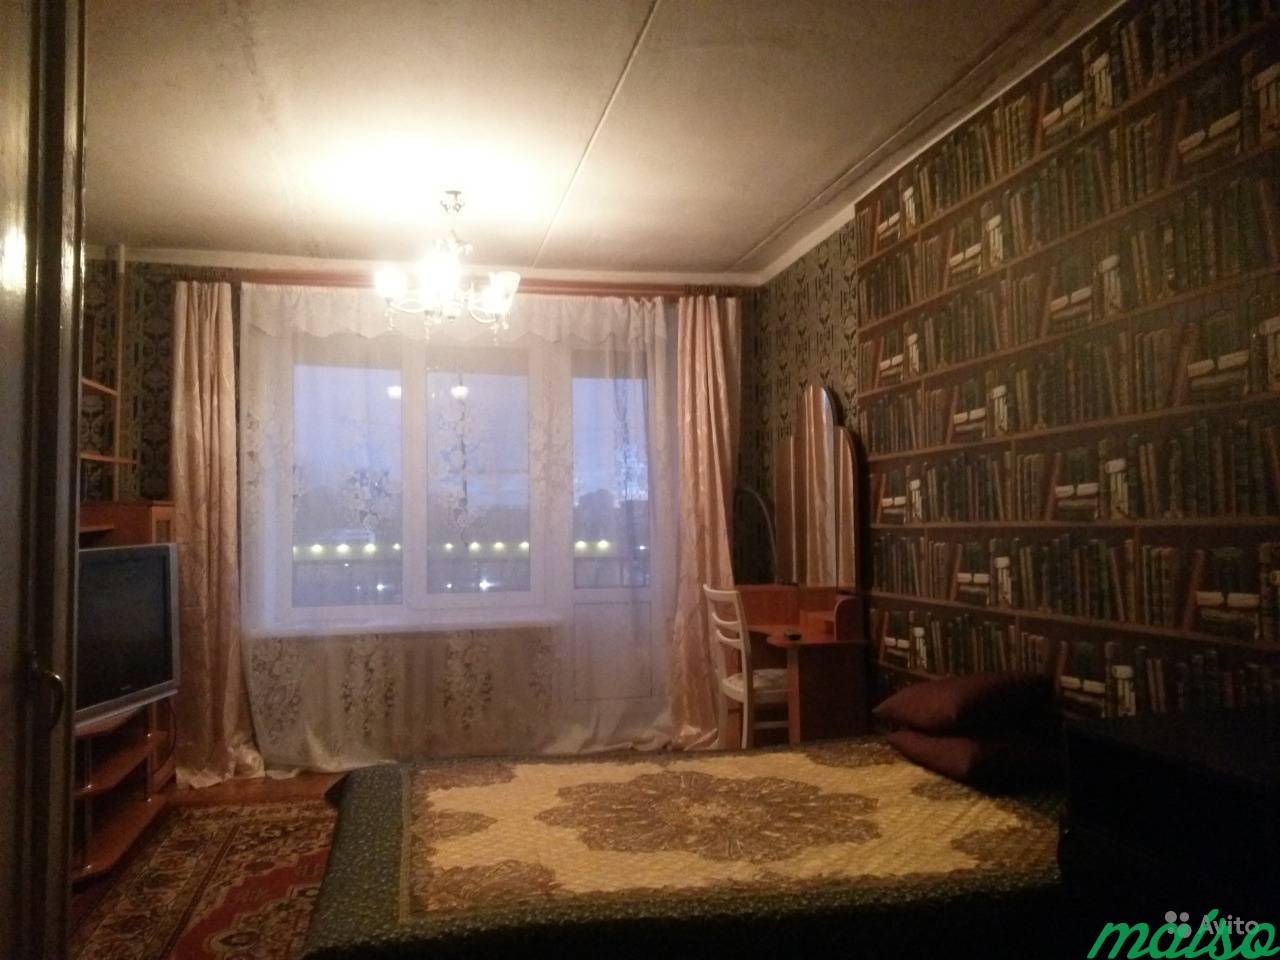 Комната 30.5 м² в 1-к, 5/5 эт. в Санкт-Петербурге. Фото 3